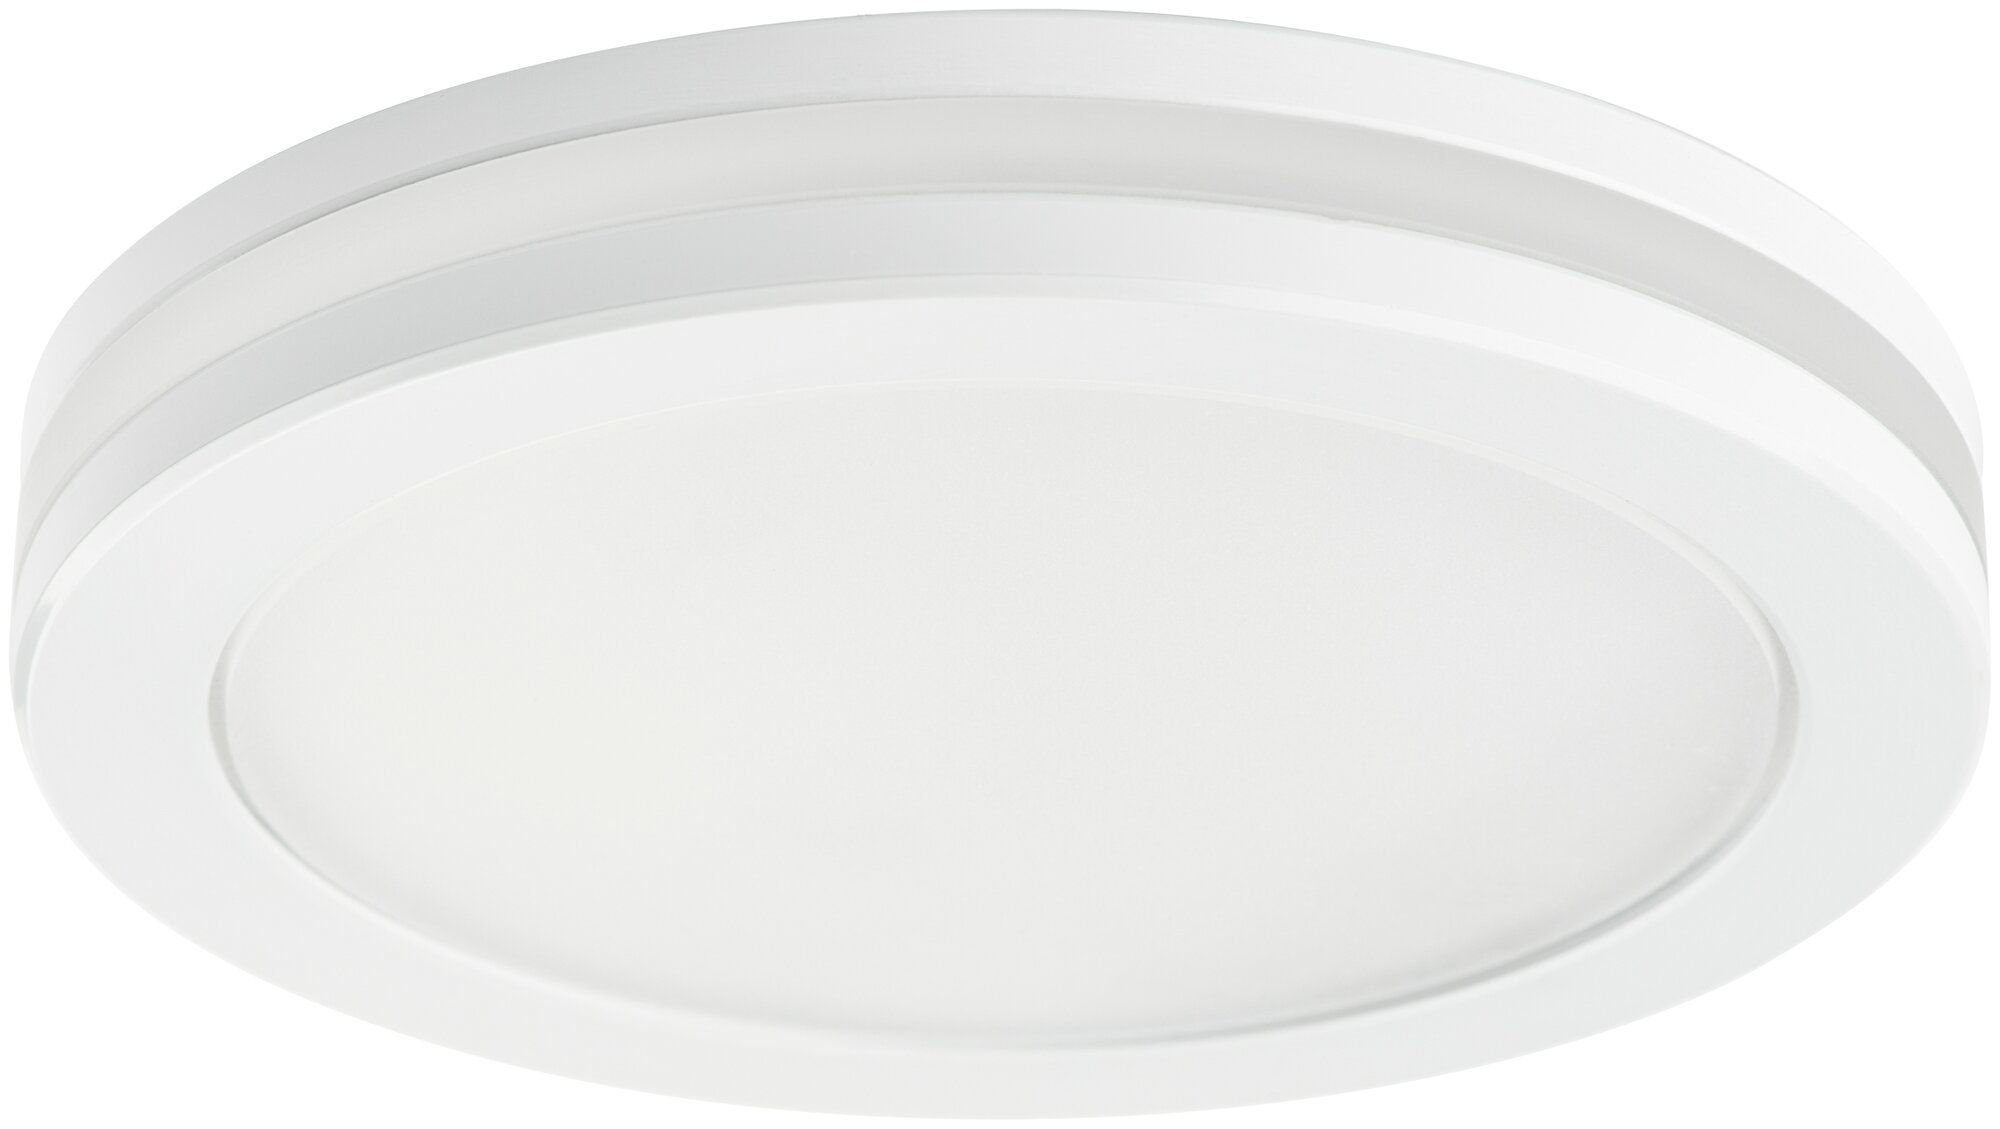 Светильник Lightstar Maturo 070664, LED, 9 Вт, 4000, нейтральный белый, цвет арматуры: белый, цвет плафона: белый